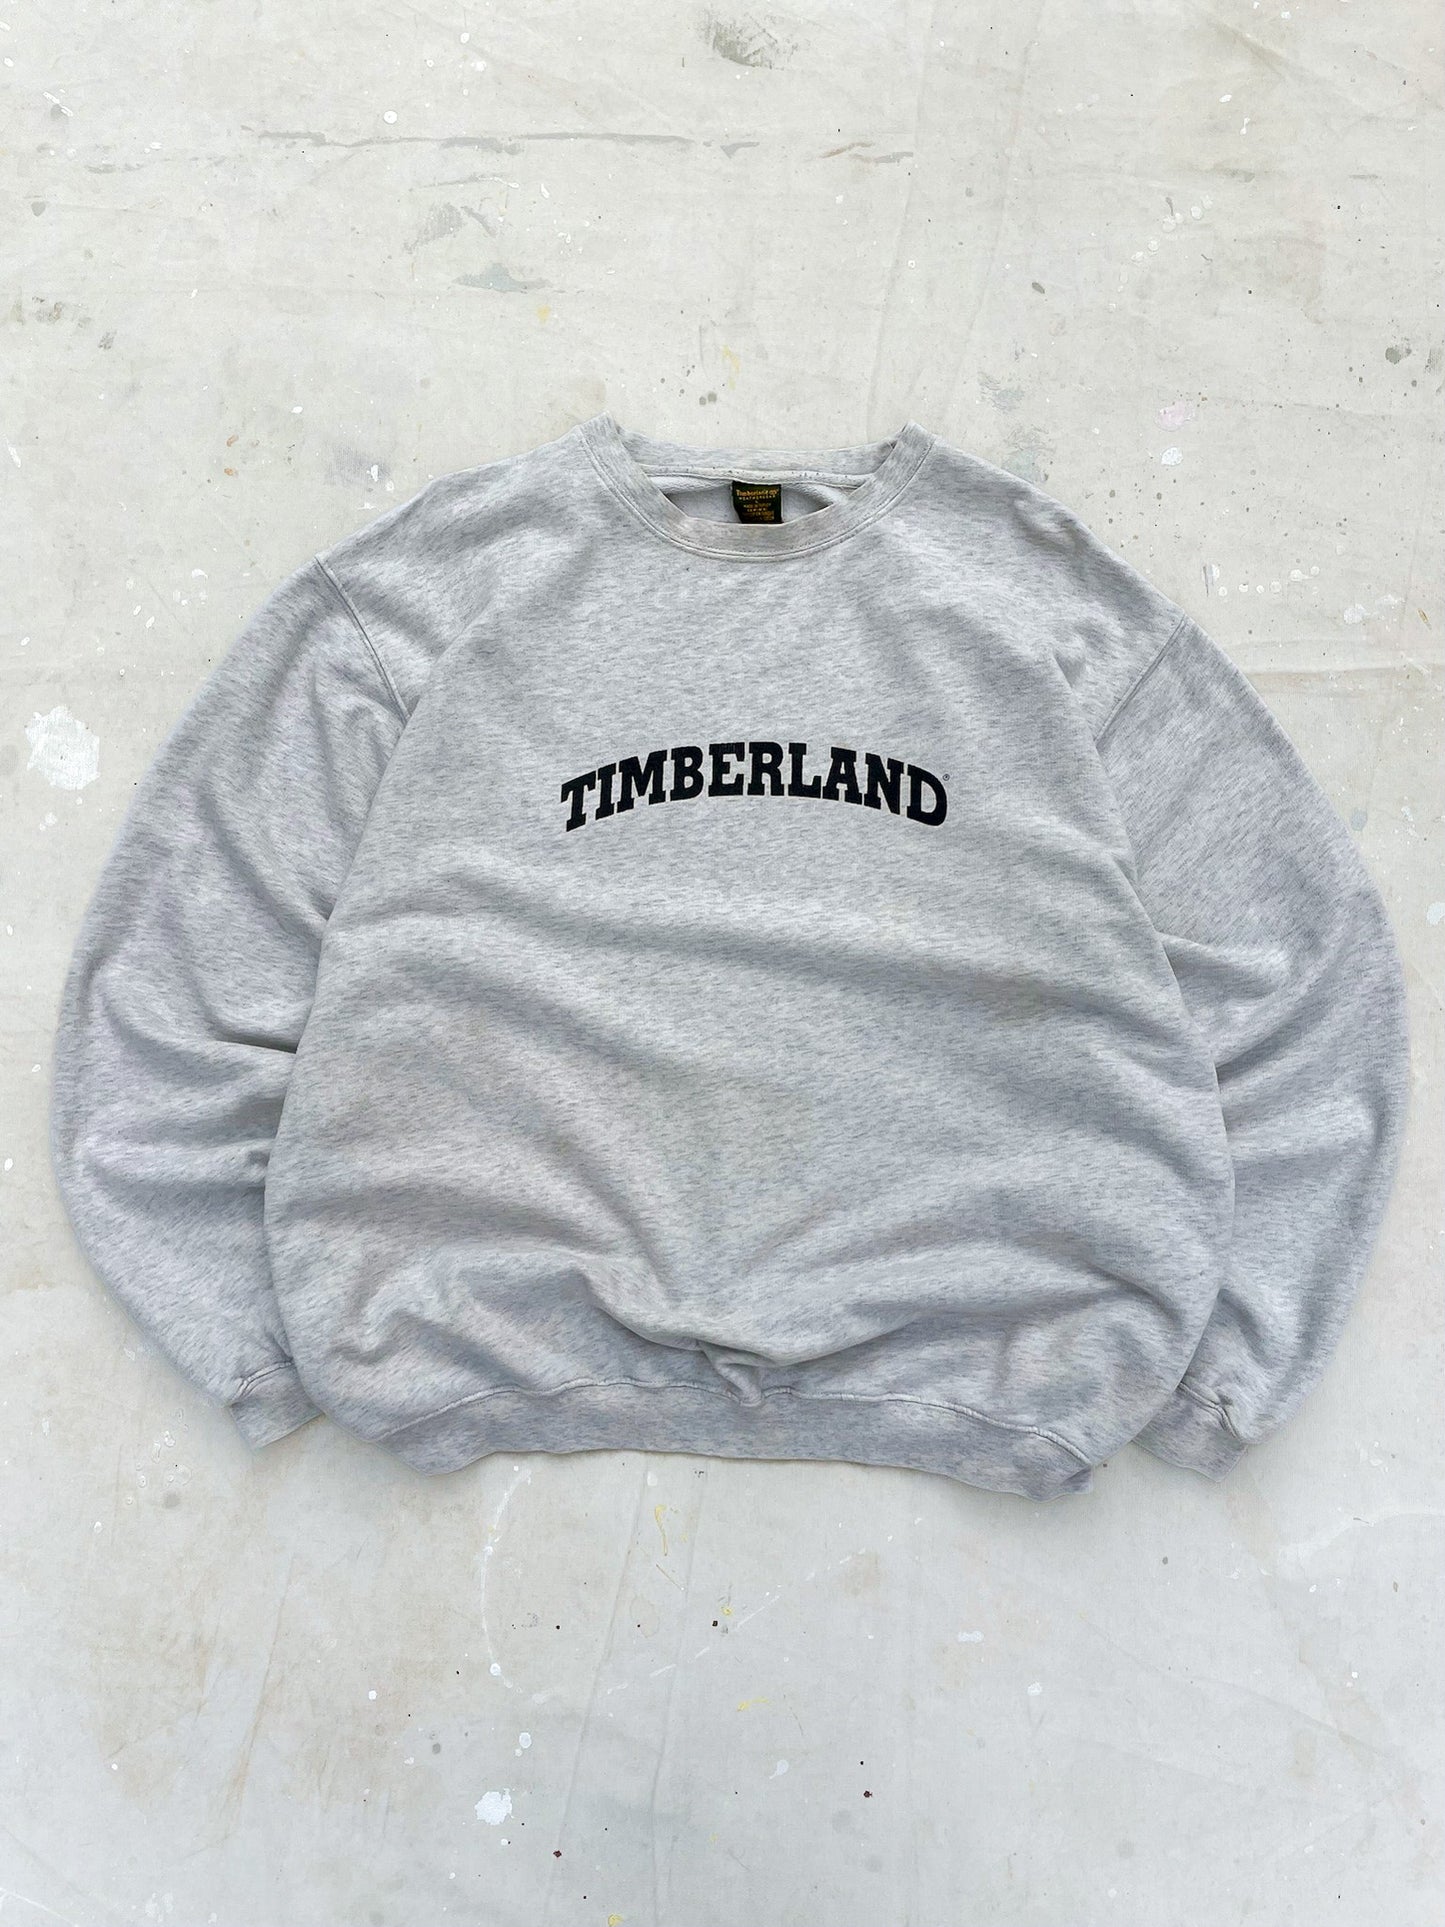 Timberland Spellout Crewneck—[L]